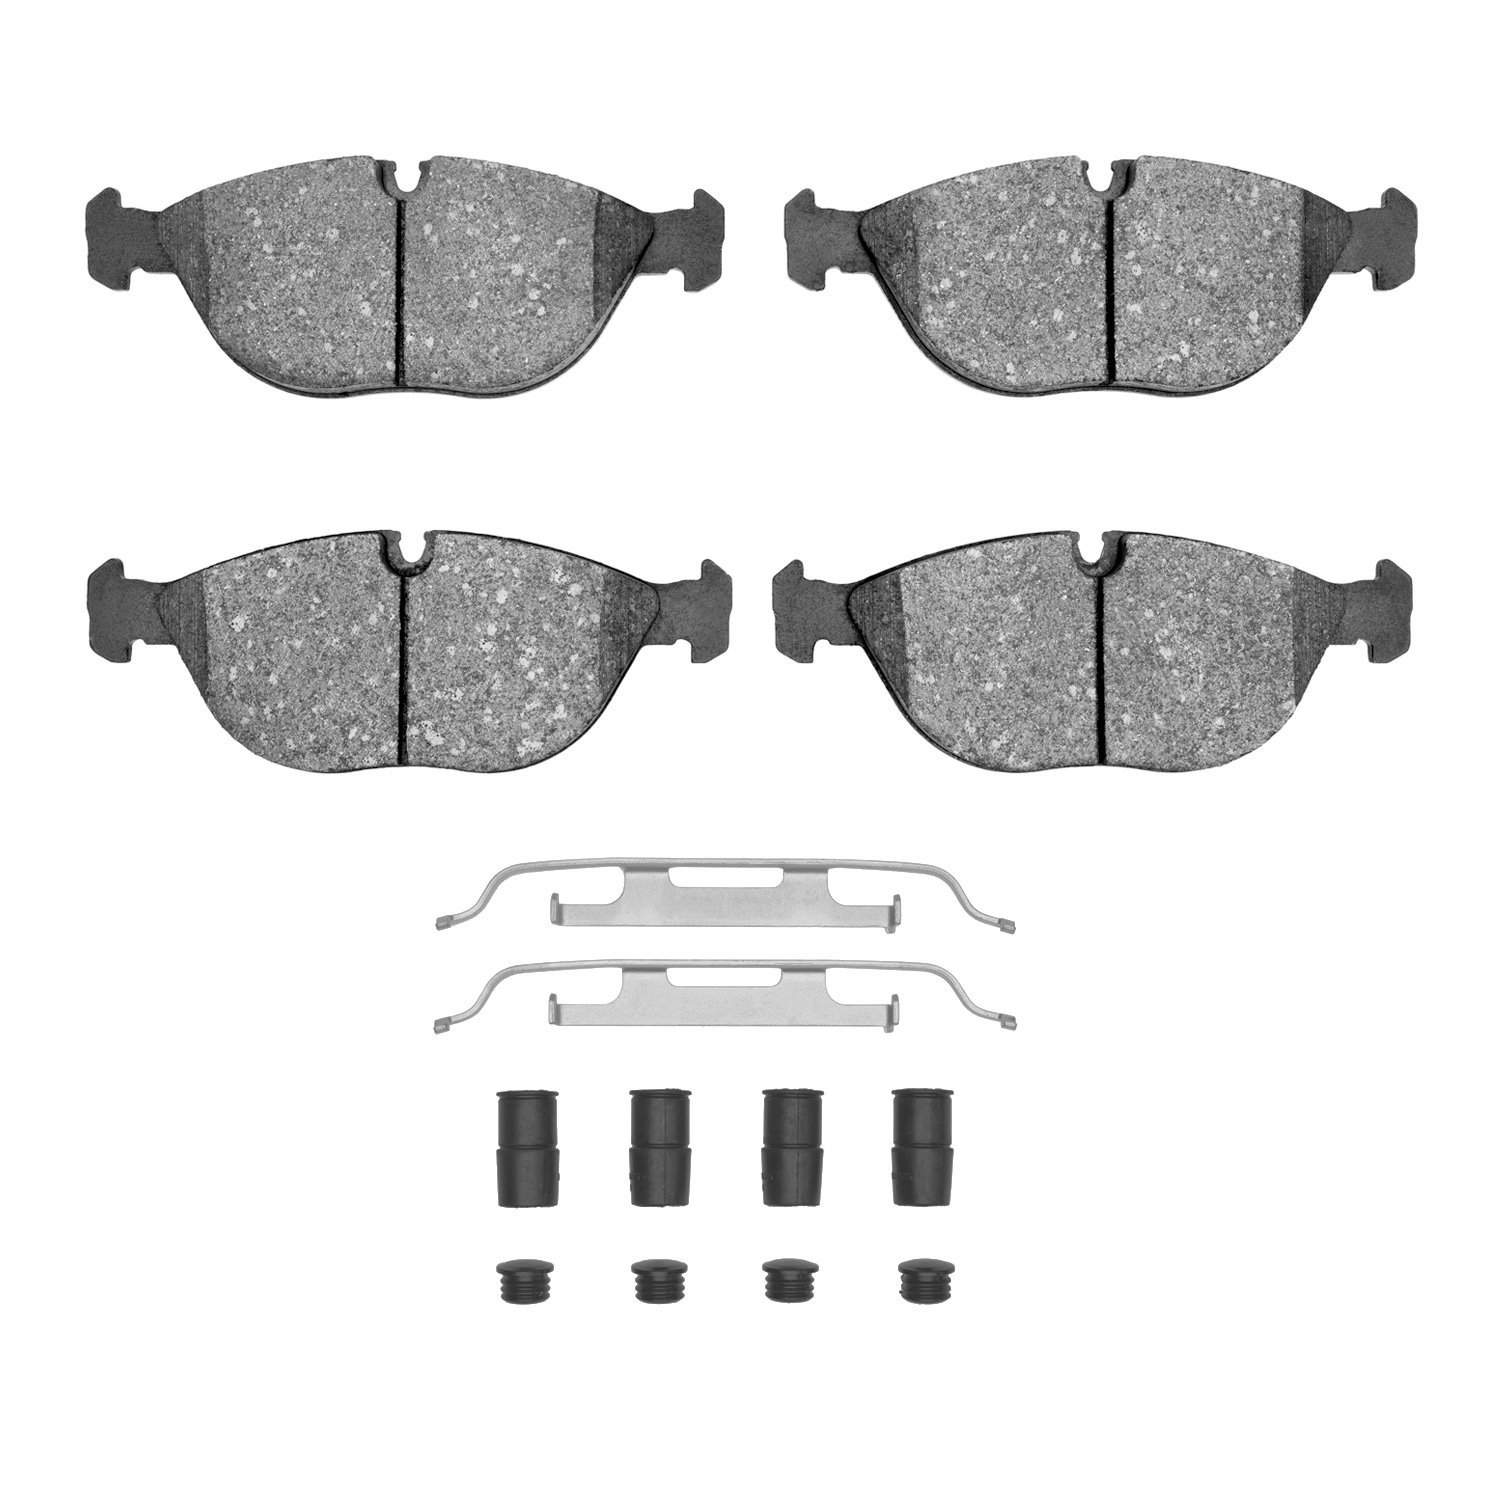 1311-0682-01 3000-Series Semi-Metallic Brake Pads & Hardware Kit, 1995-2006 Multiple Makes/Models, Position: Front